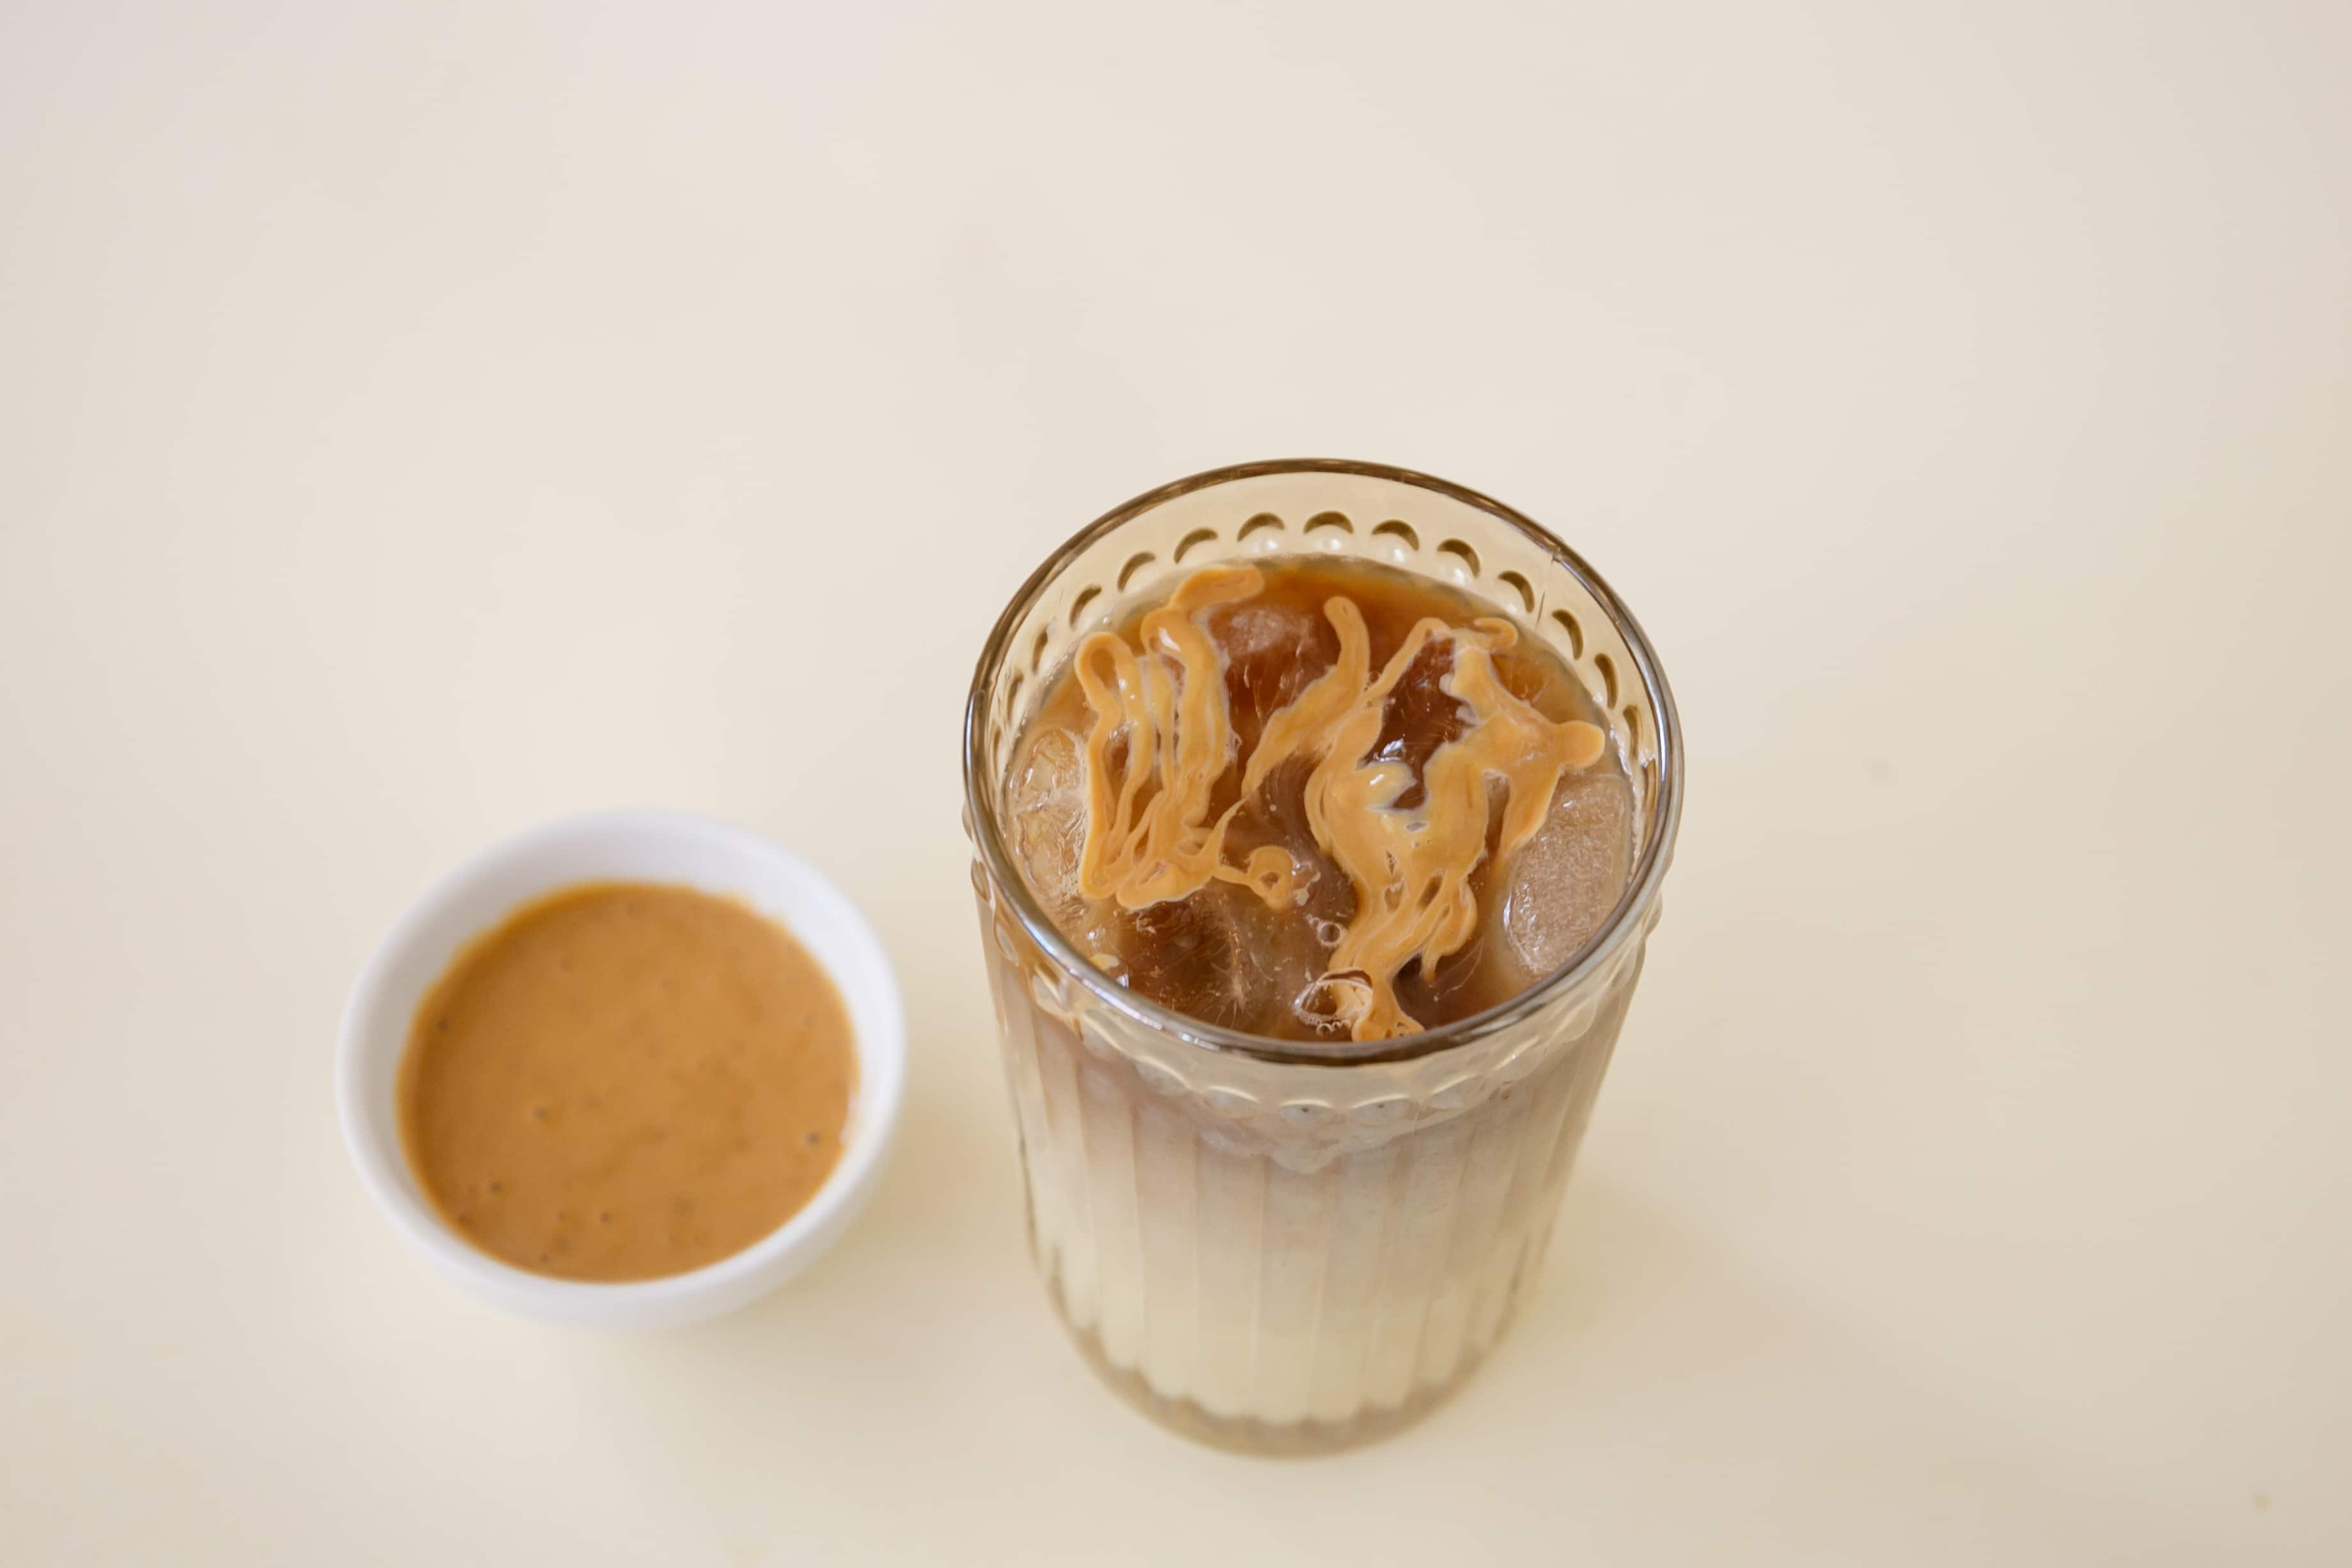 Starbucks Copycat Iced Caramel Macchiato Recipe